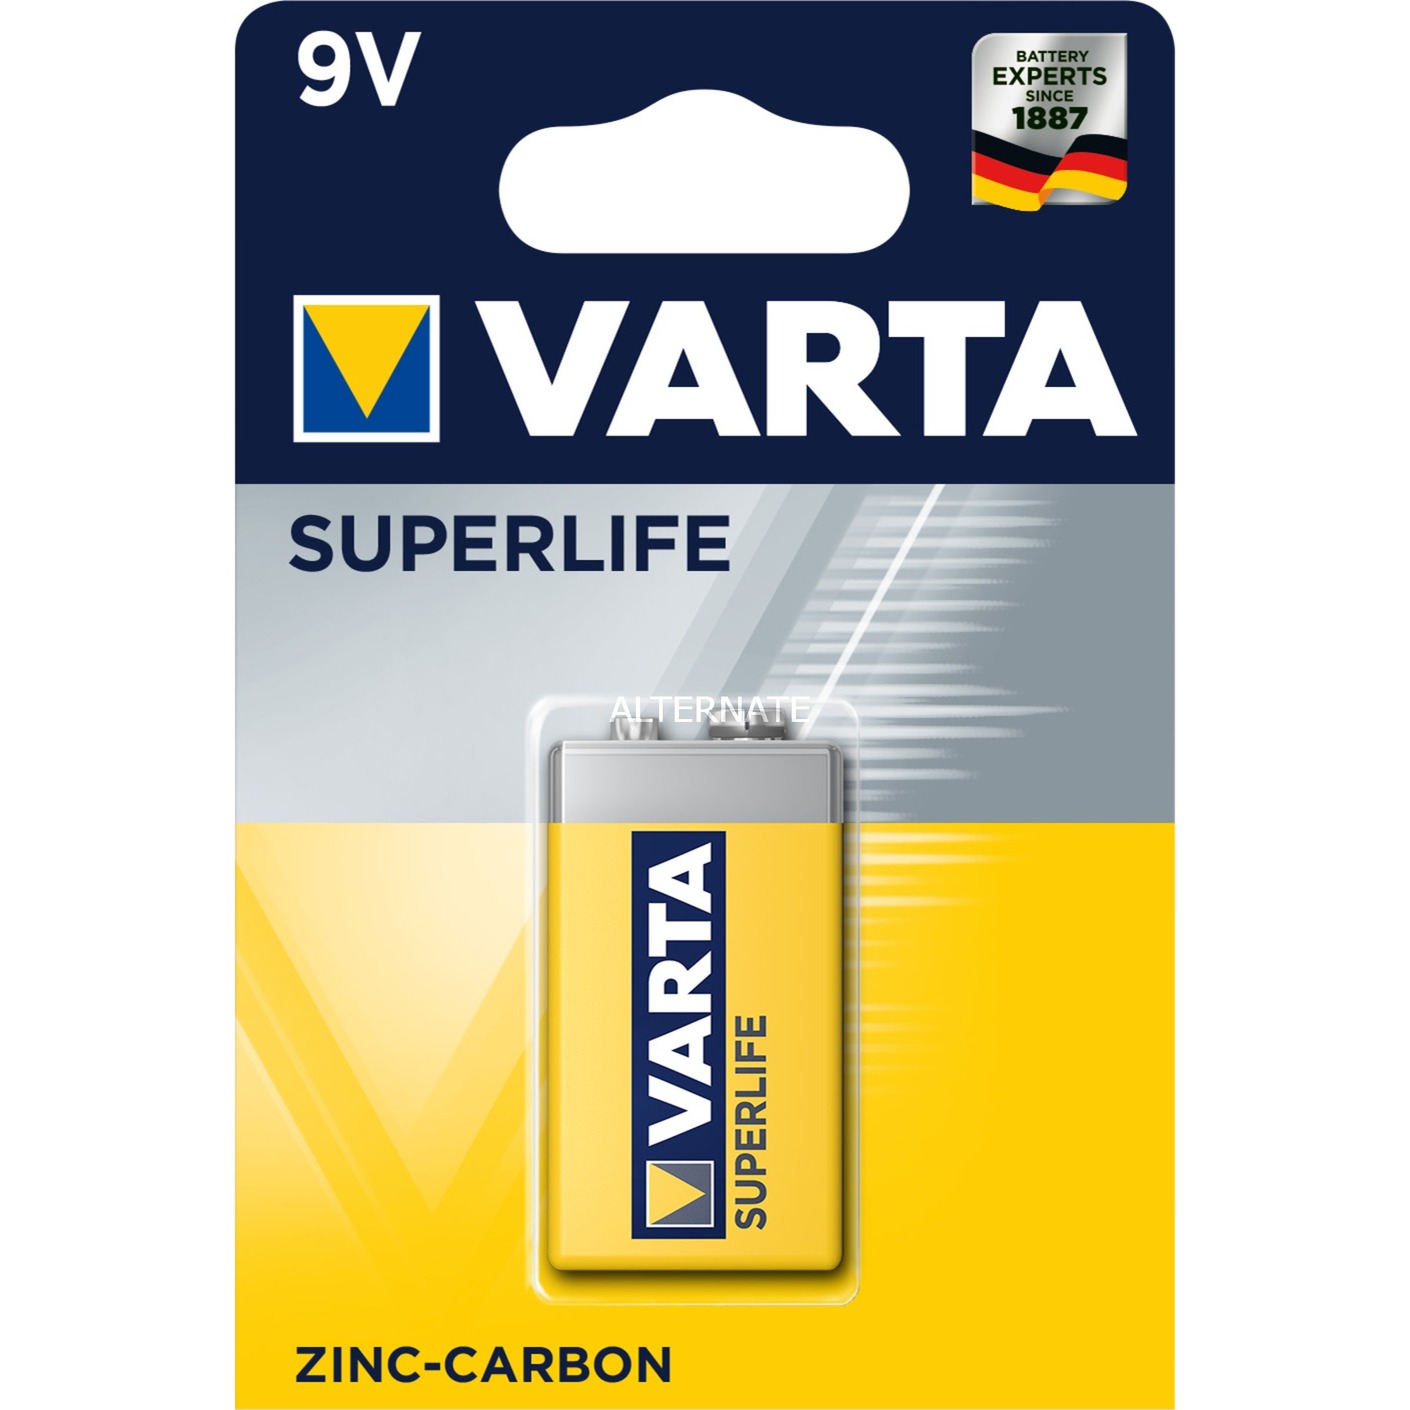 Varta Superlife 9V Batteria monouso Zinco-Carbonio